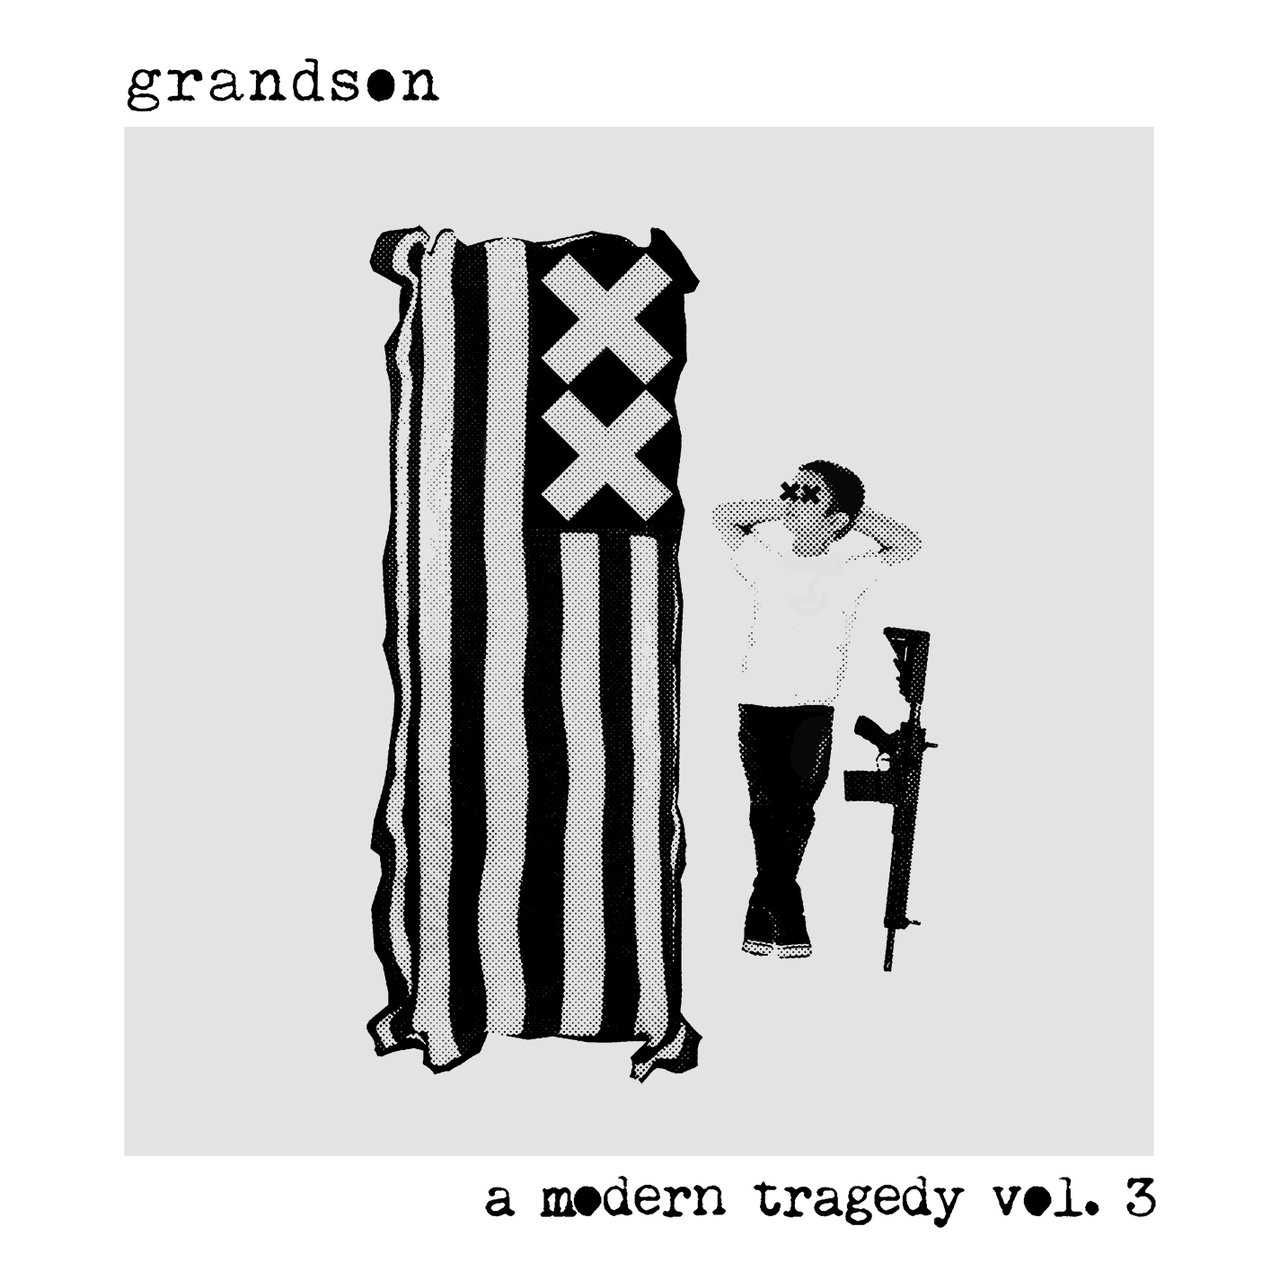 Grandson - a modern tragedy vol. 3